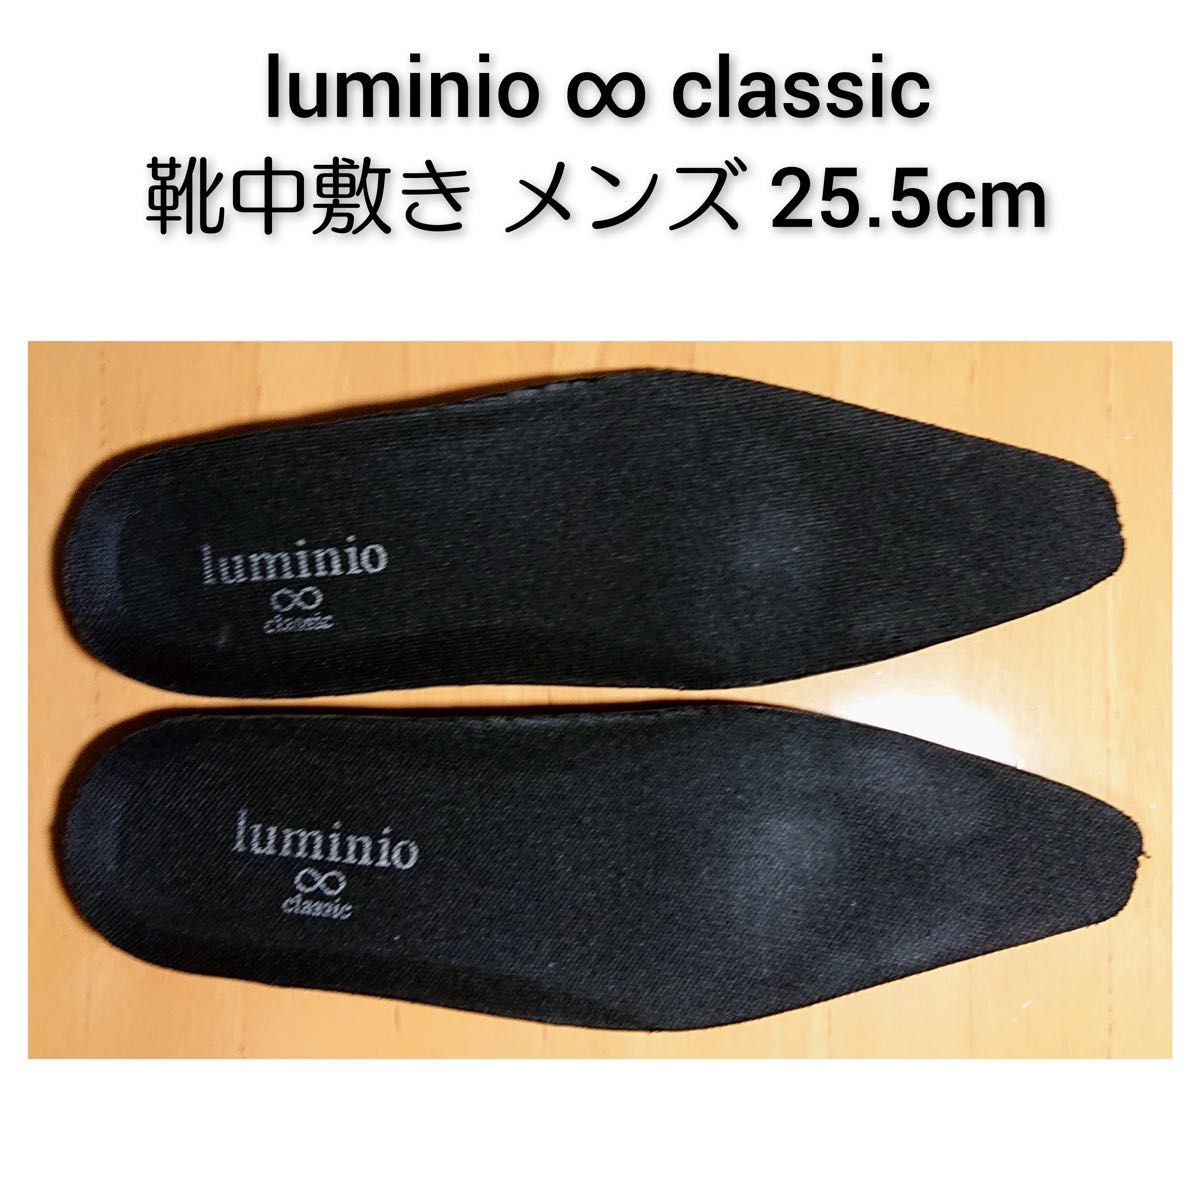 luminio classic メンズシューズ 中敷き インソール 25.5cm